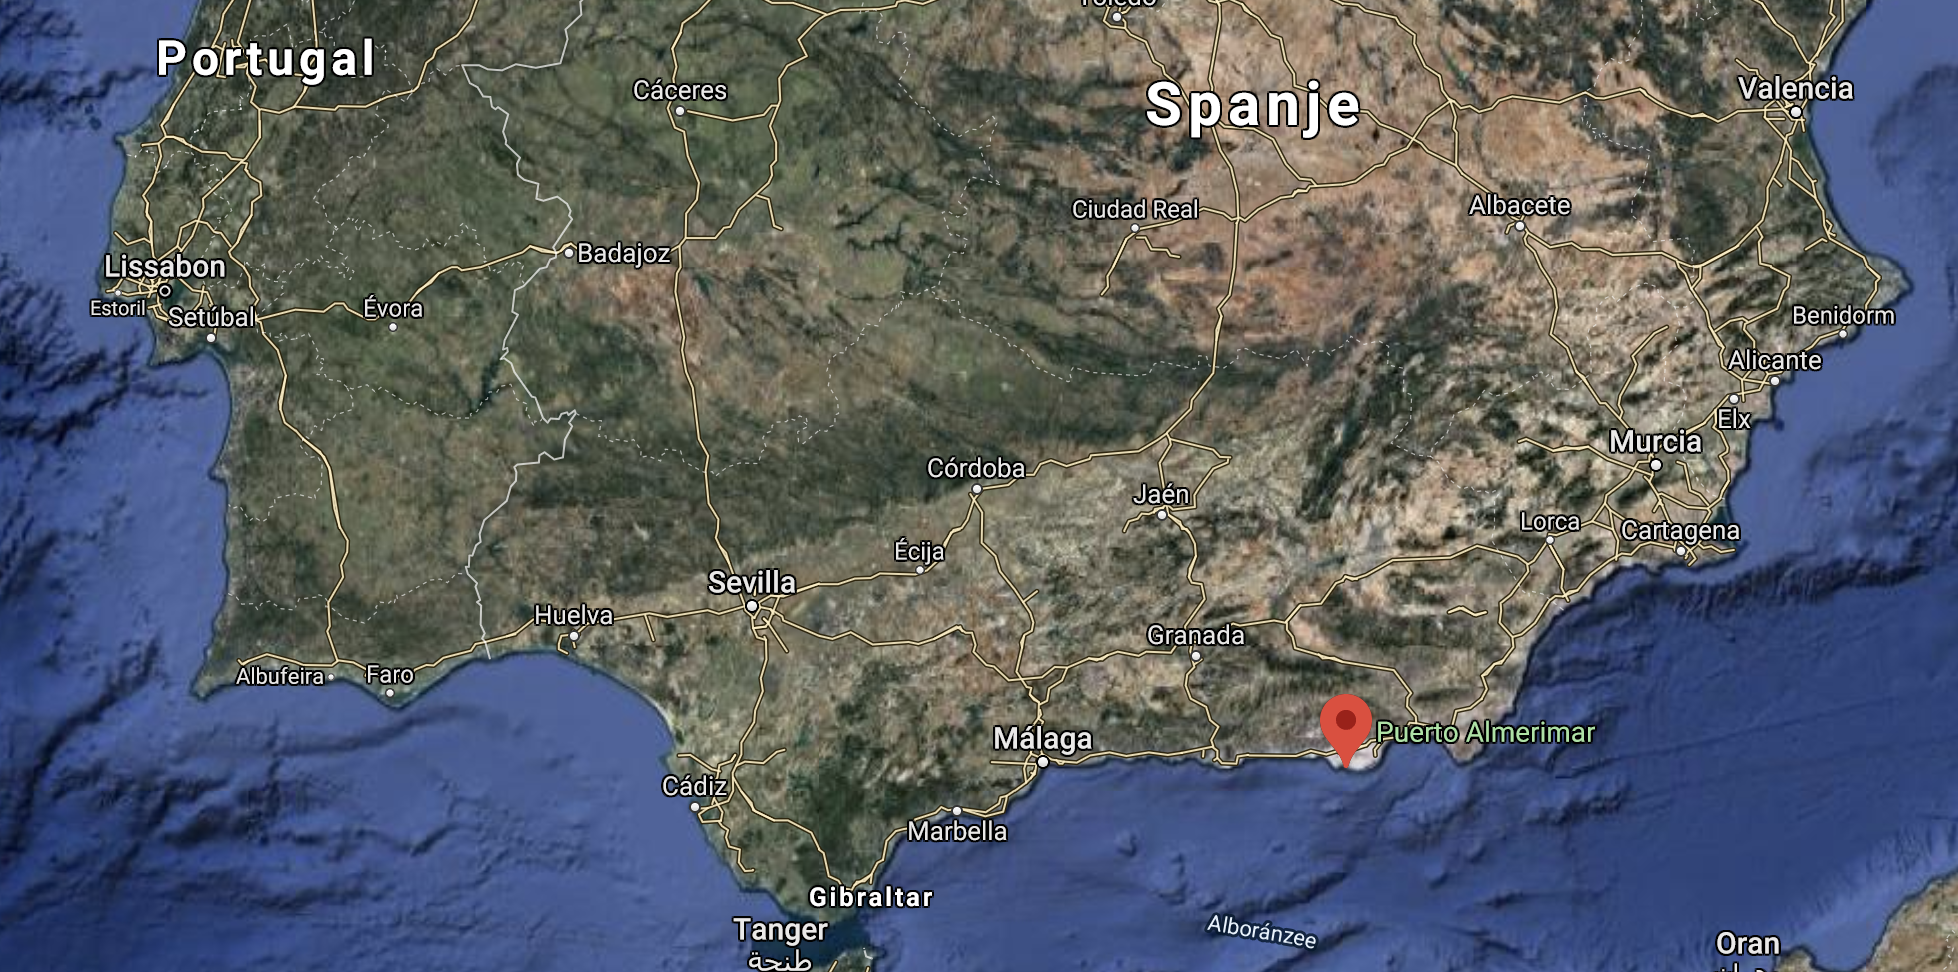 Our location in October: Puerto Almerimar, Andalusia, Spain